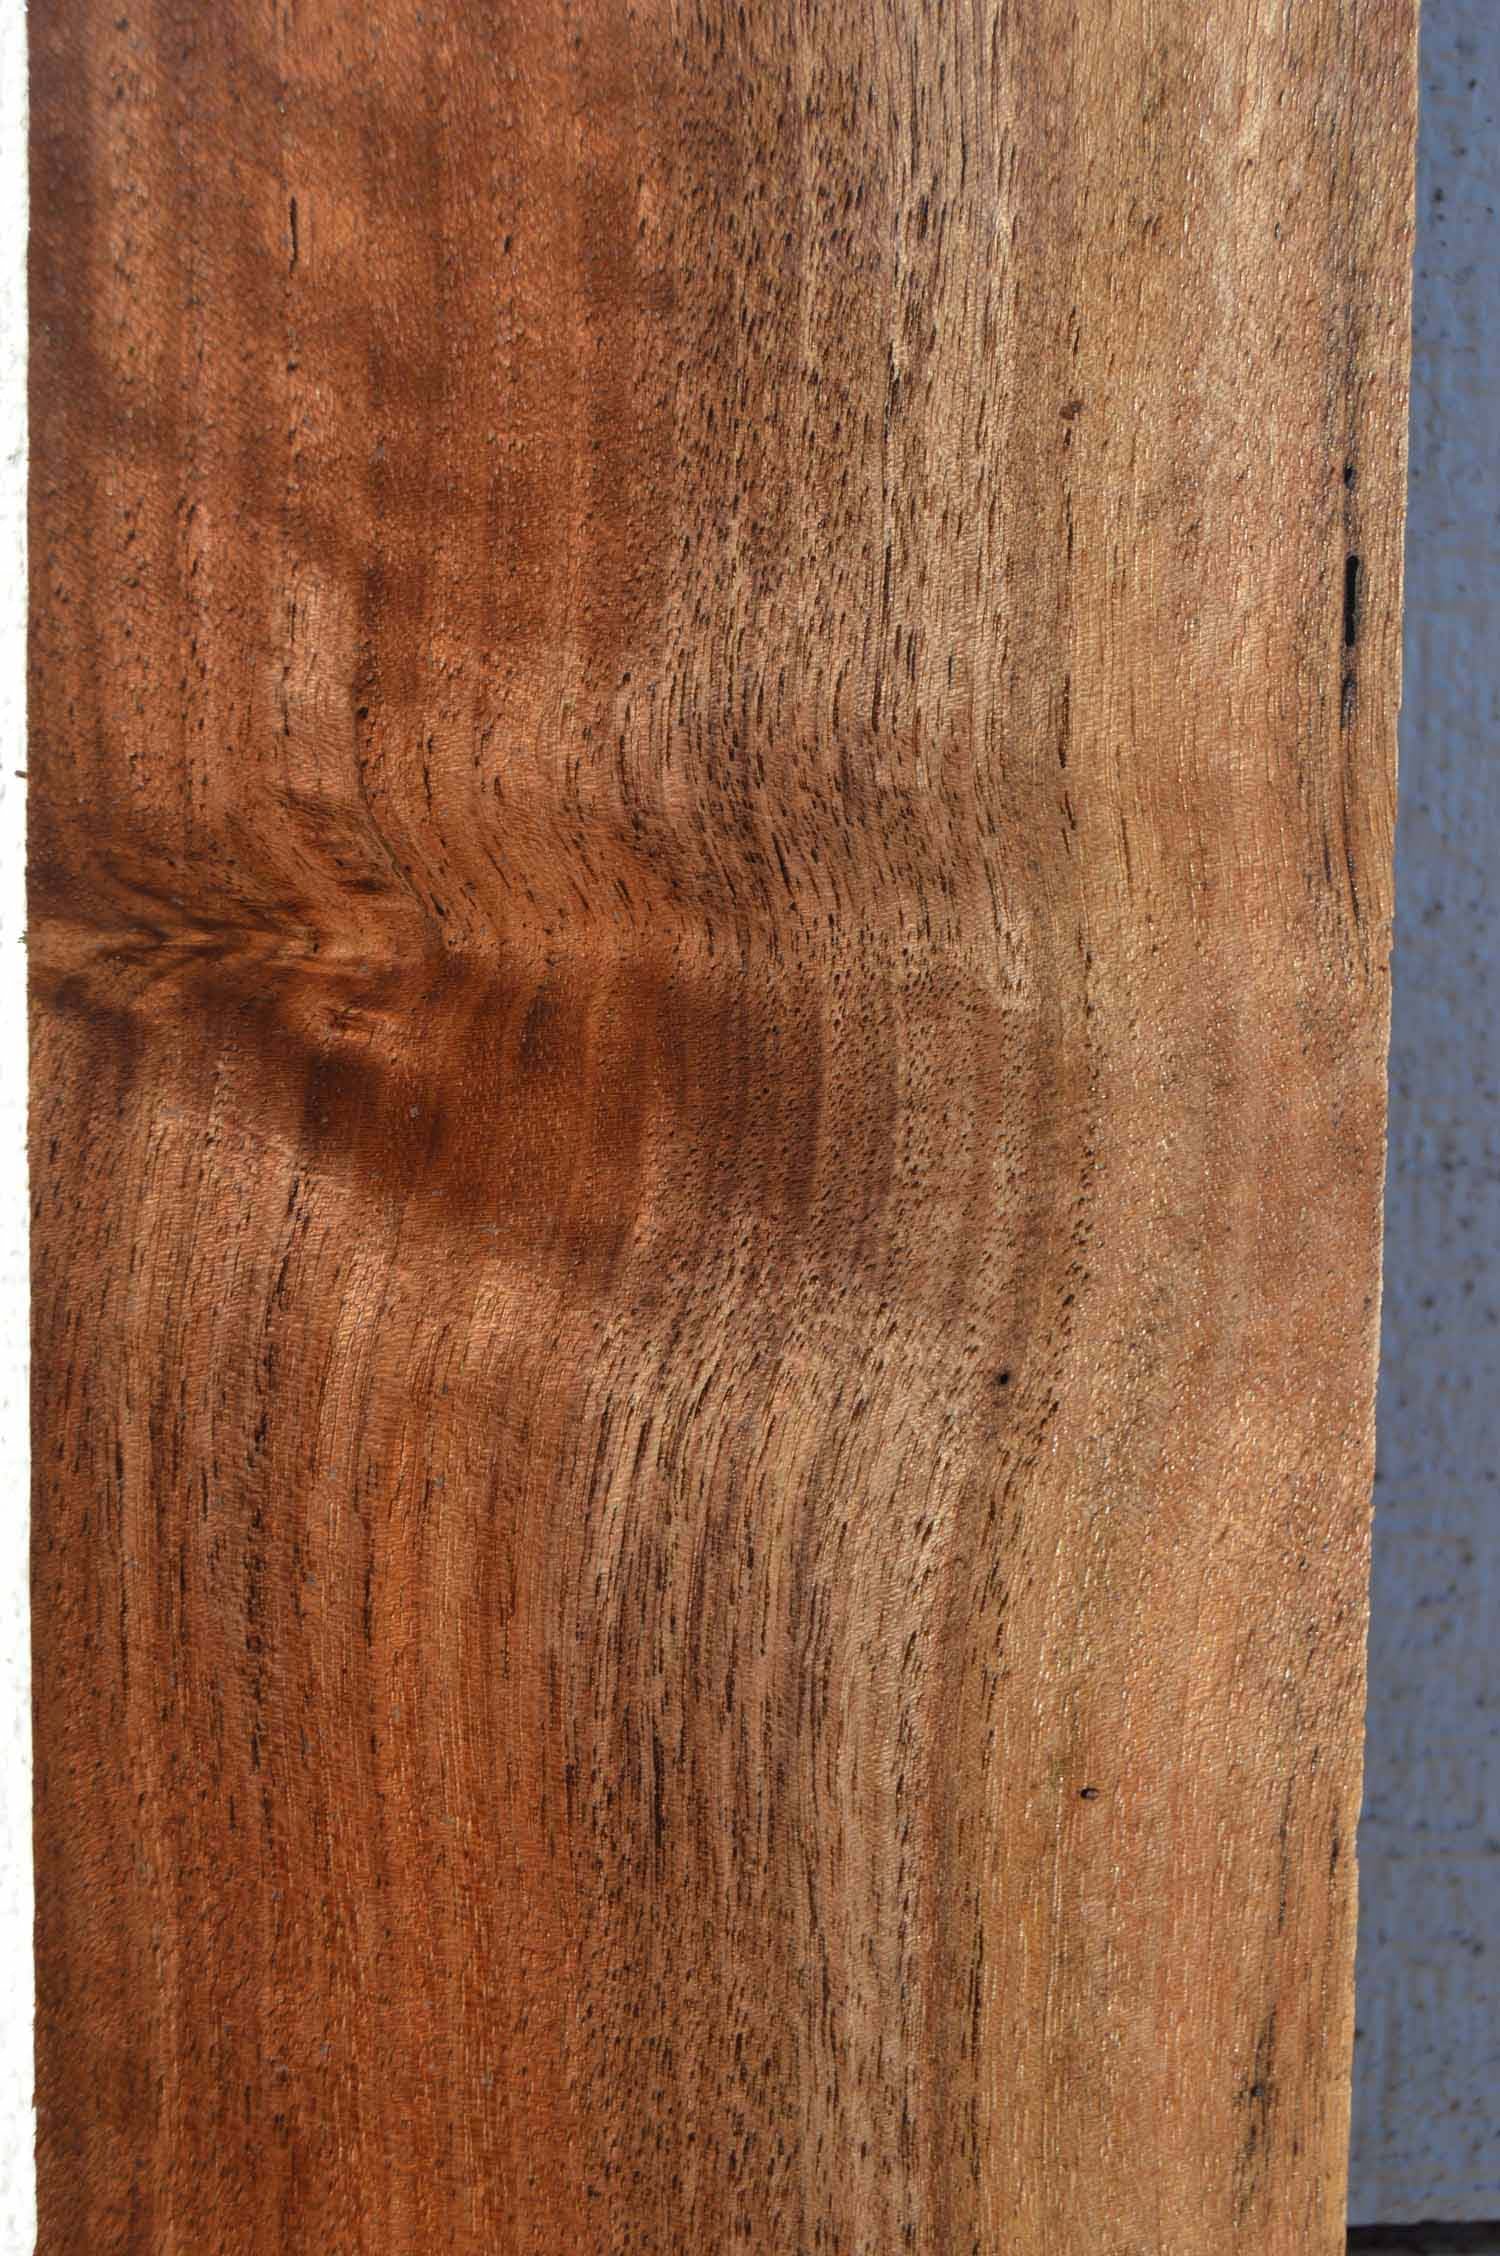 Claro Walnut Lumber CLALMB116